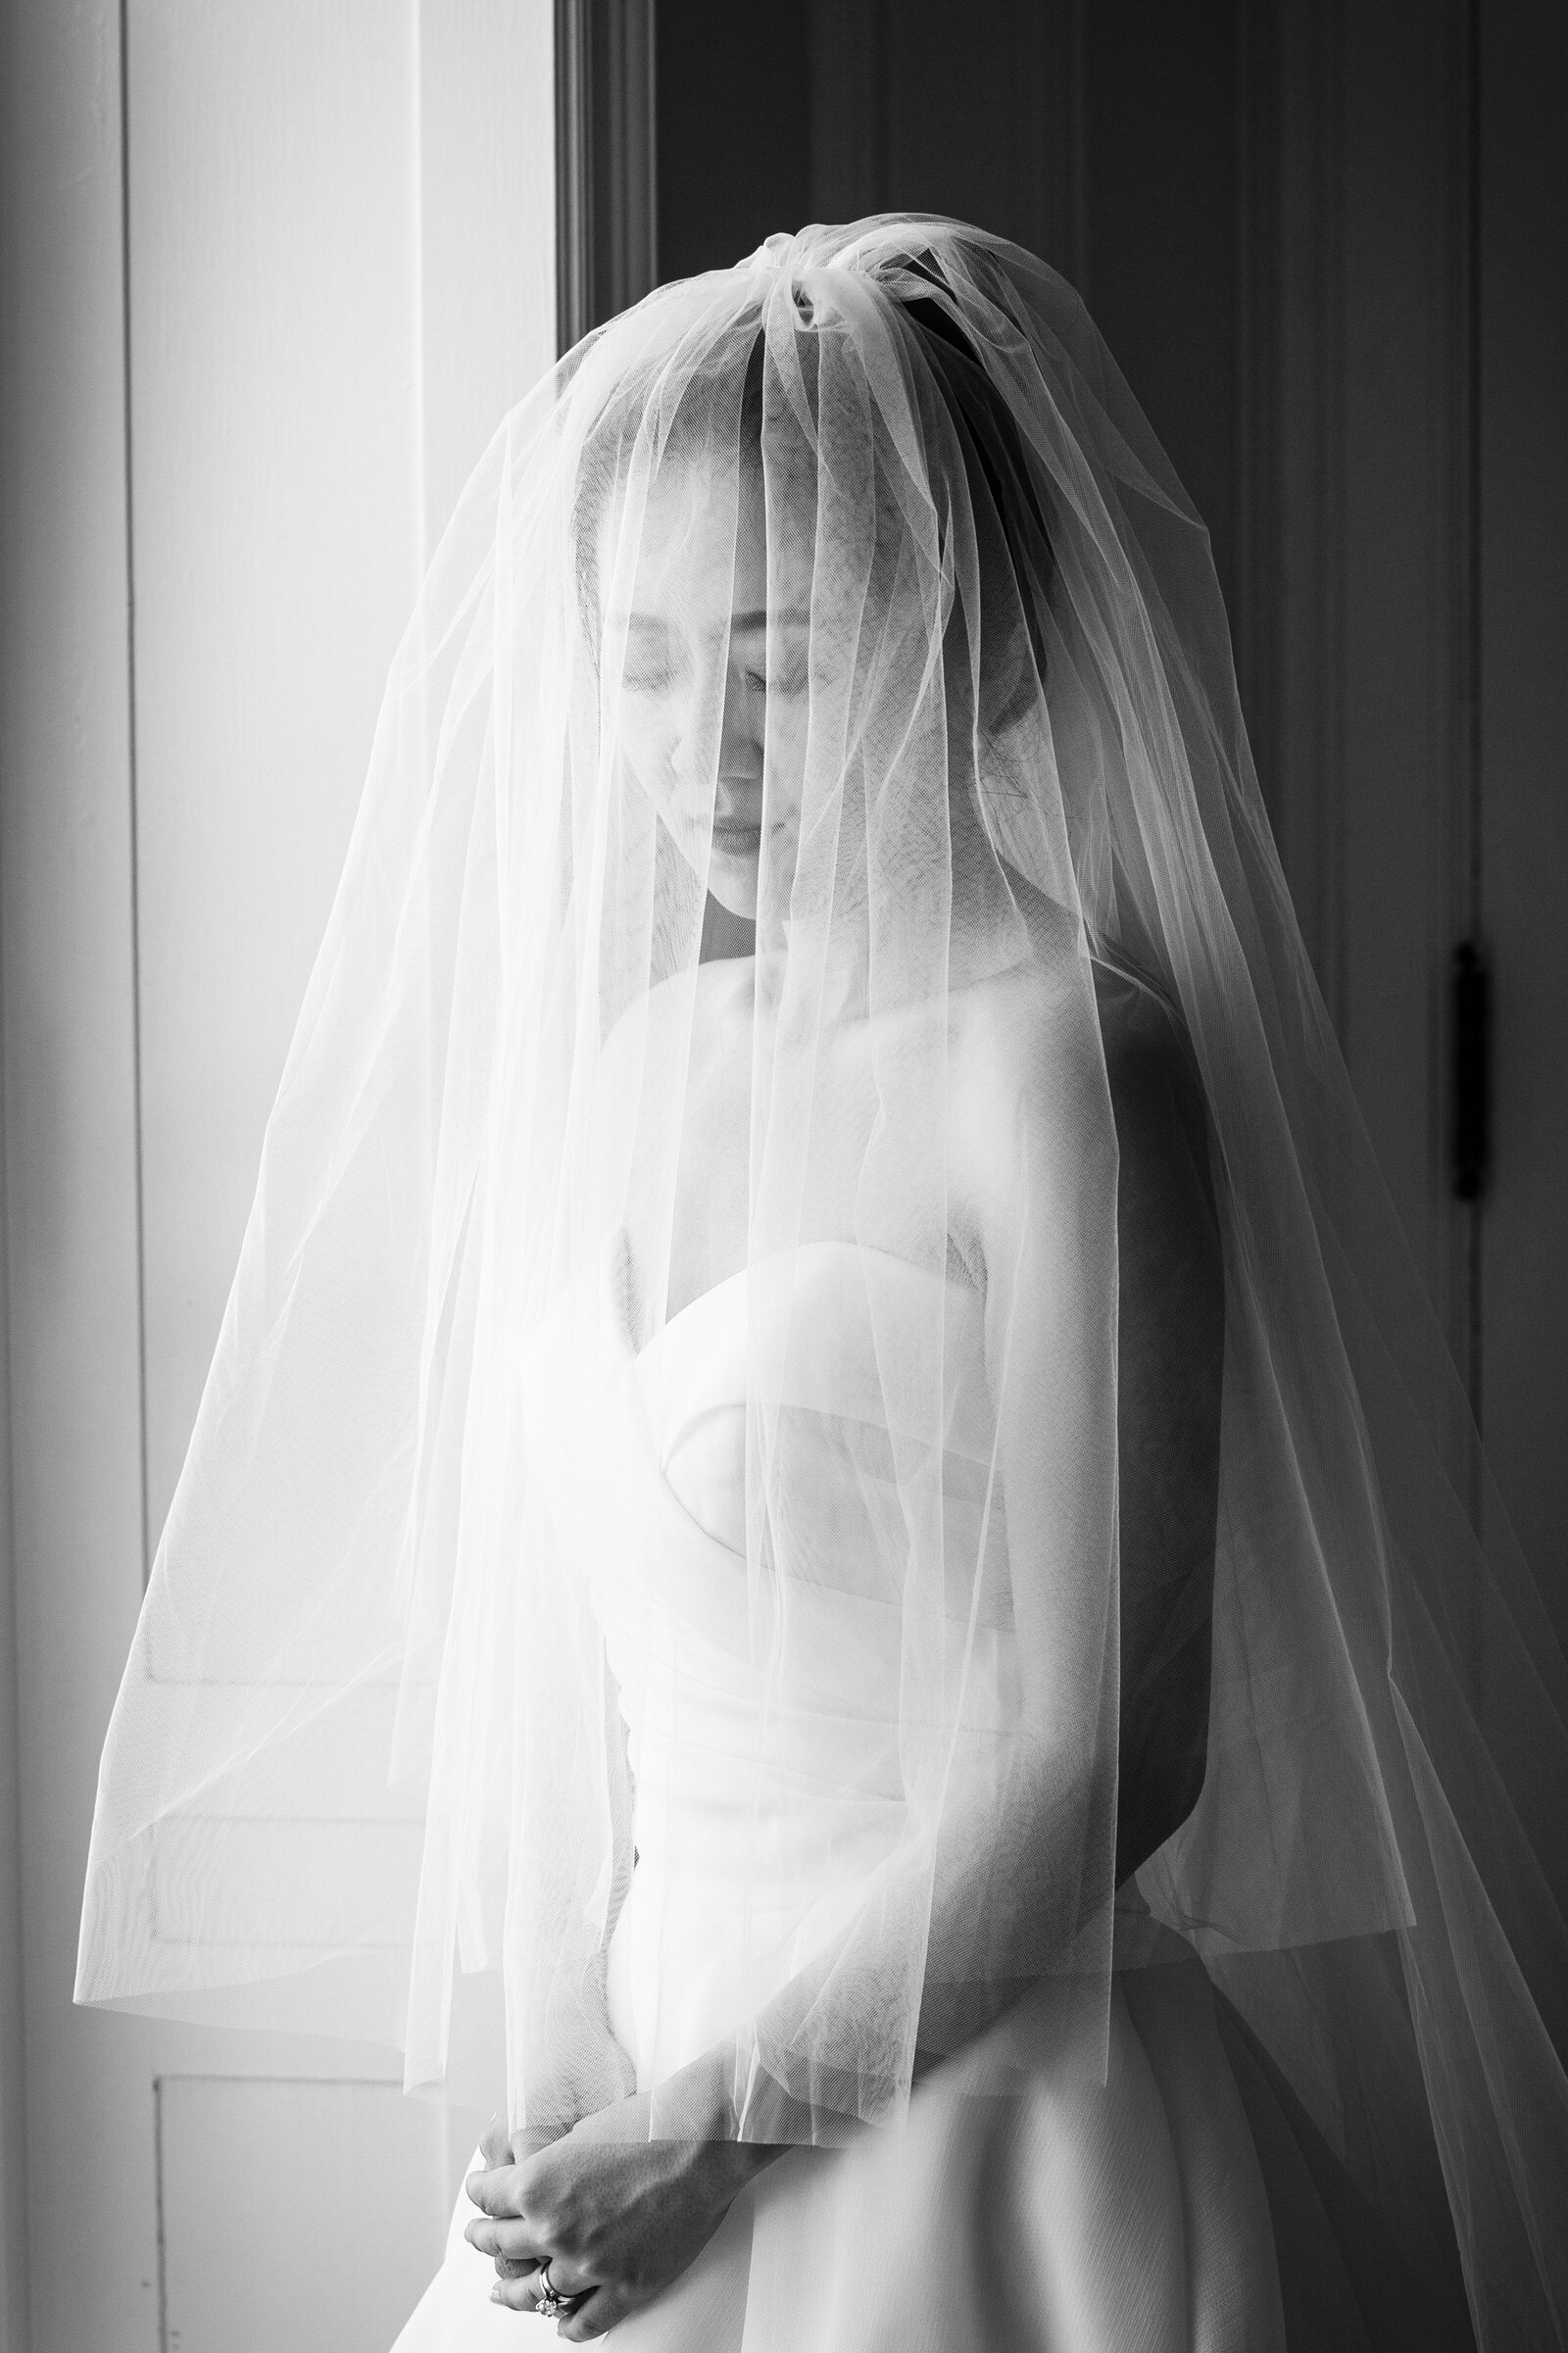 New-England-Wedding-Photographer-Sabrina-Scolari-14